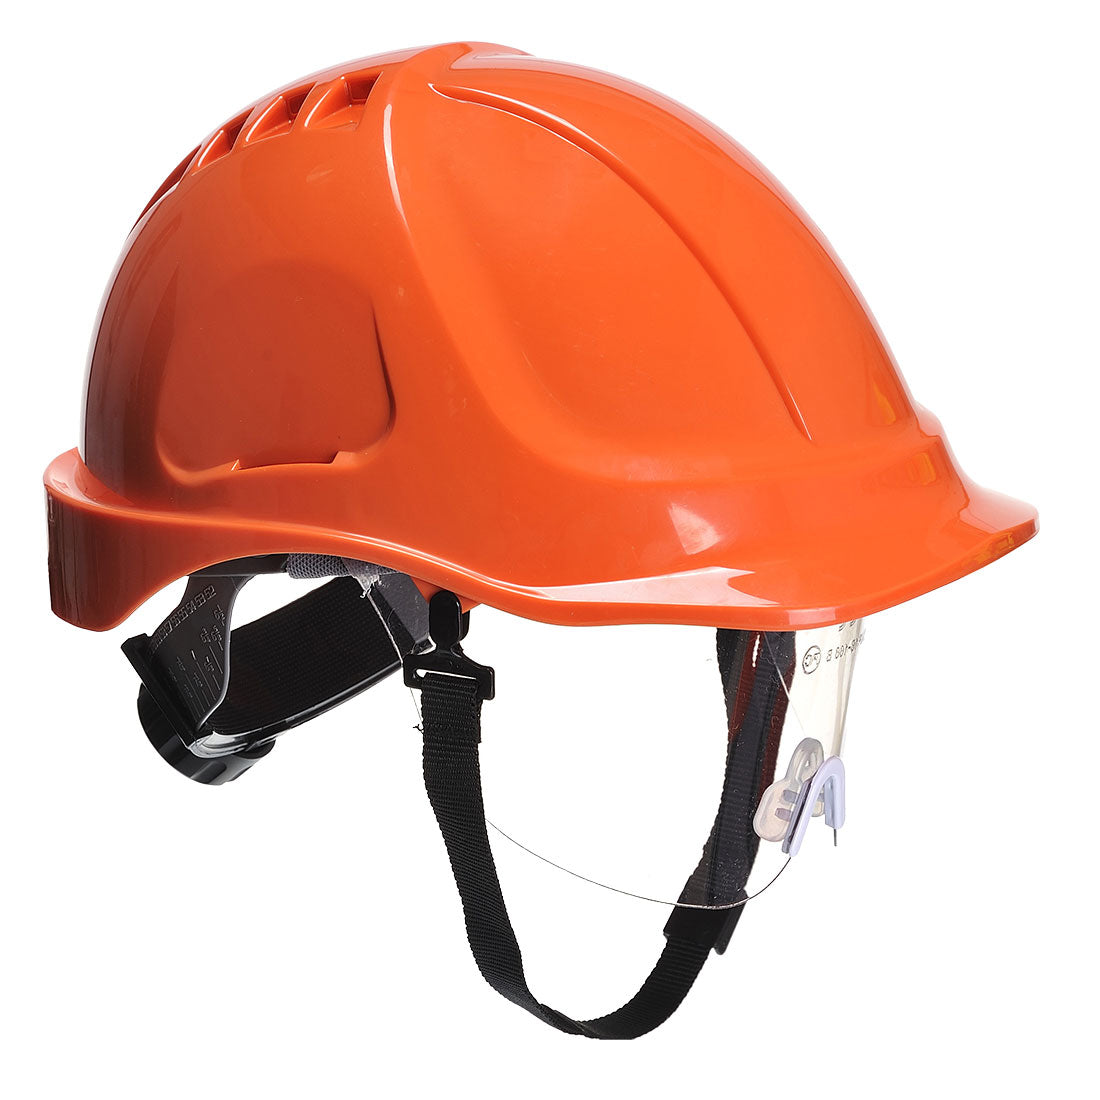 Portwest PW54 Endurance Plus Visor Helmet - Orange